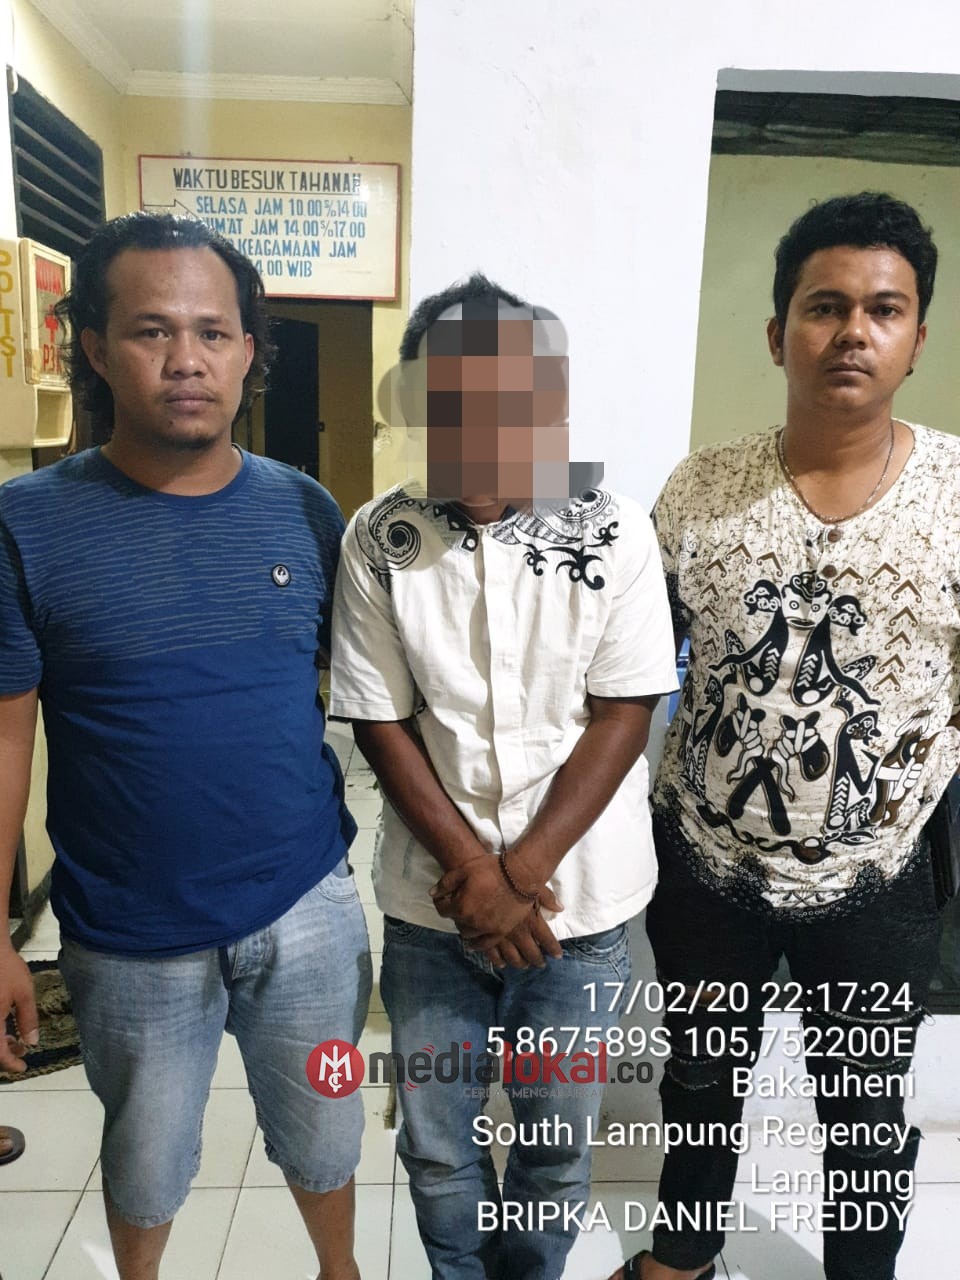 Uang Rp80 Juta Raib Saat Perayaan Imlek di Kuala Lahang, Polres Inhil Buru Pelaku Hingga Lampung